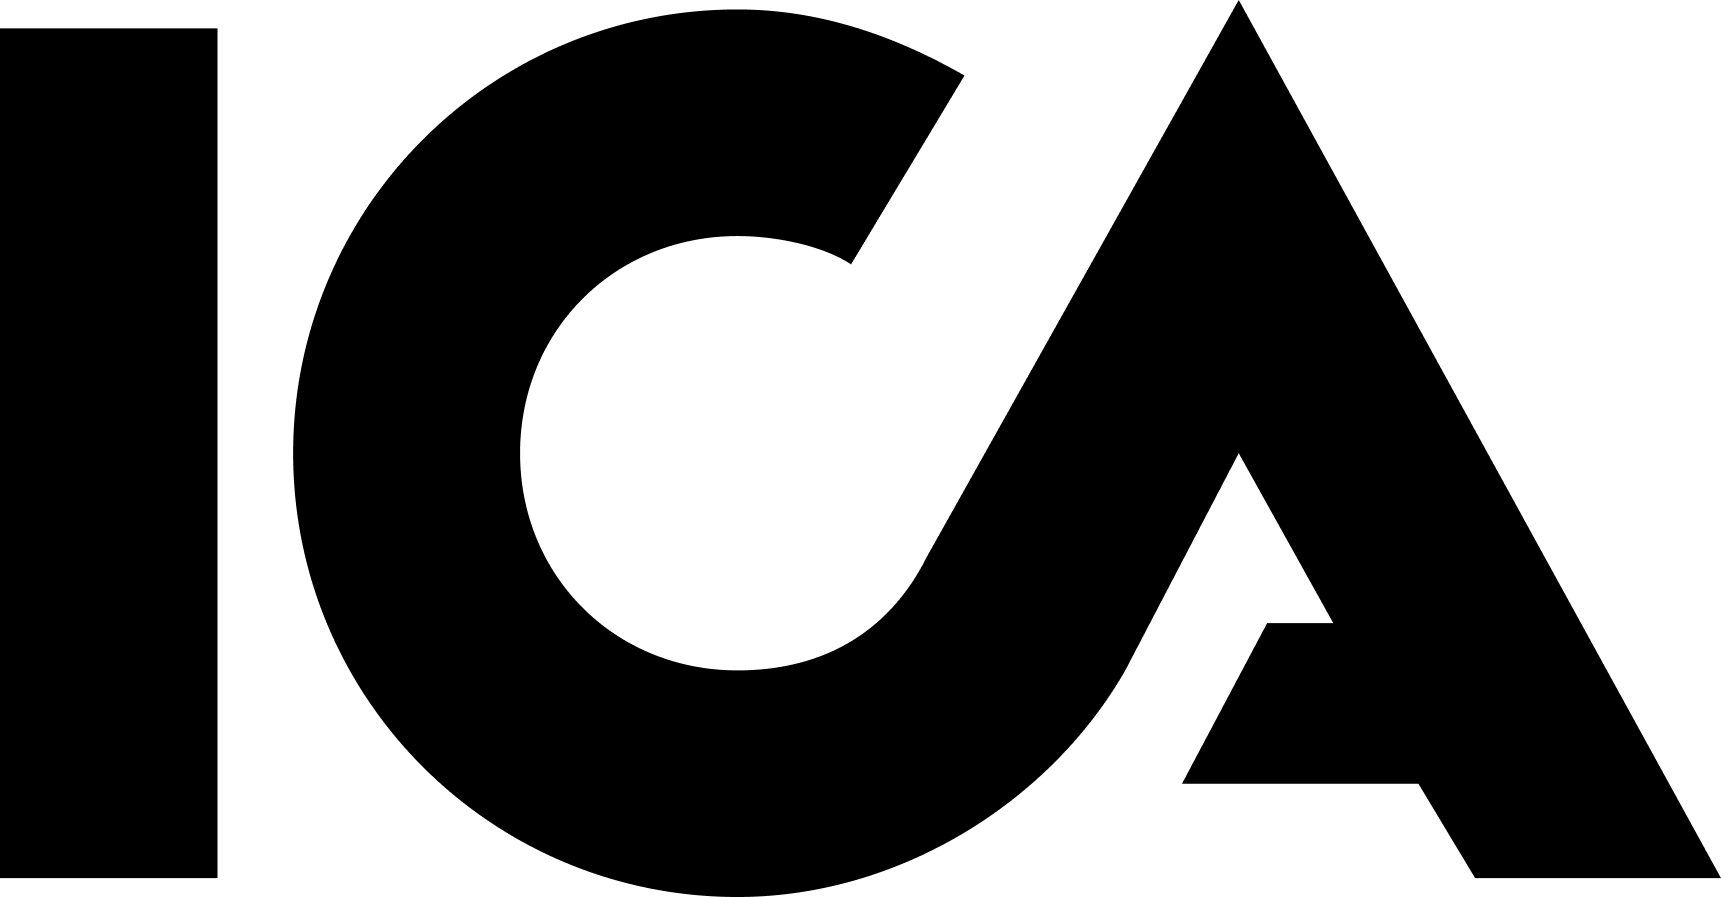 Logo Ica